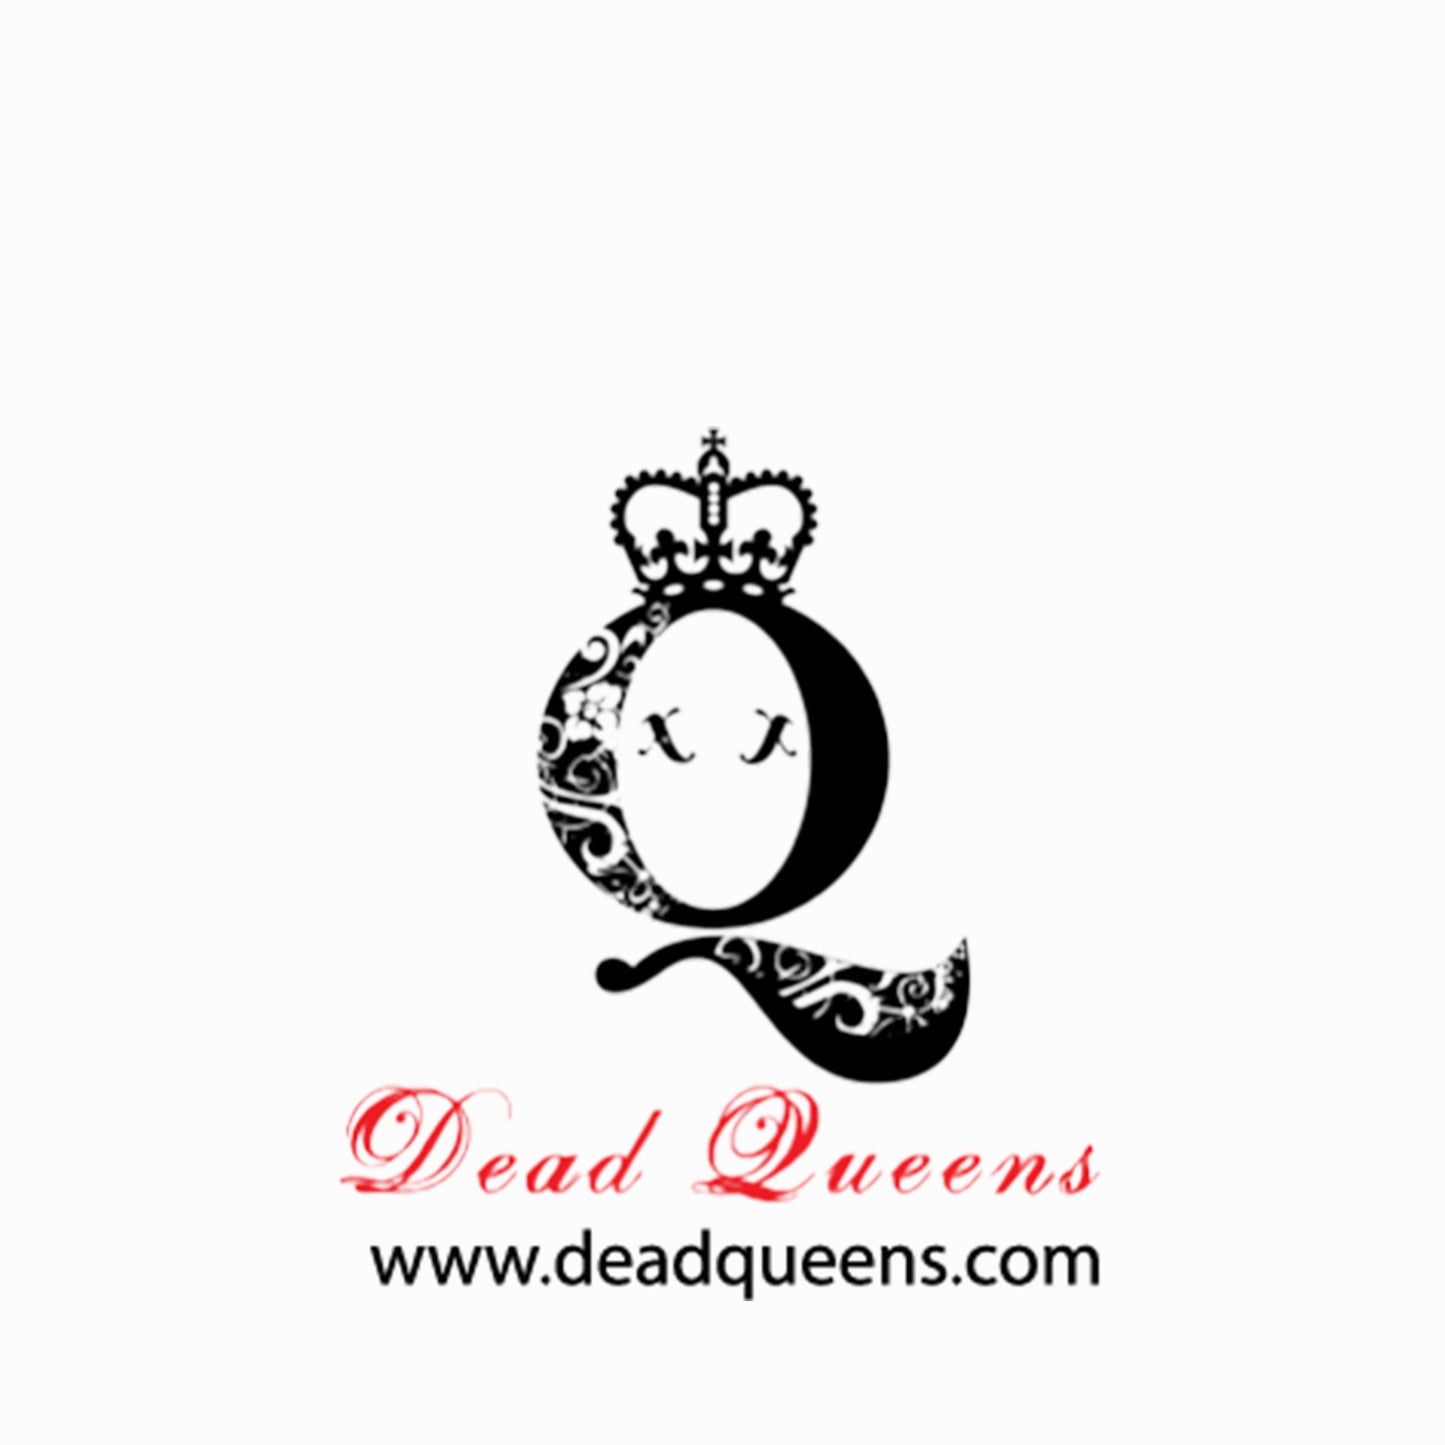 Dead Queens Black Heart Greeting Card